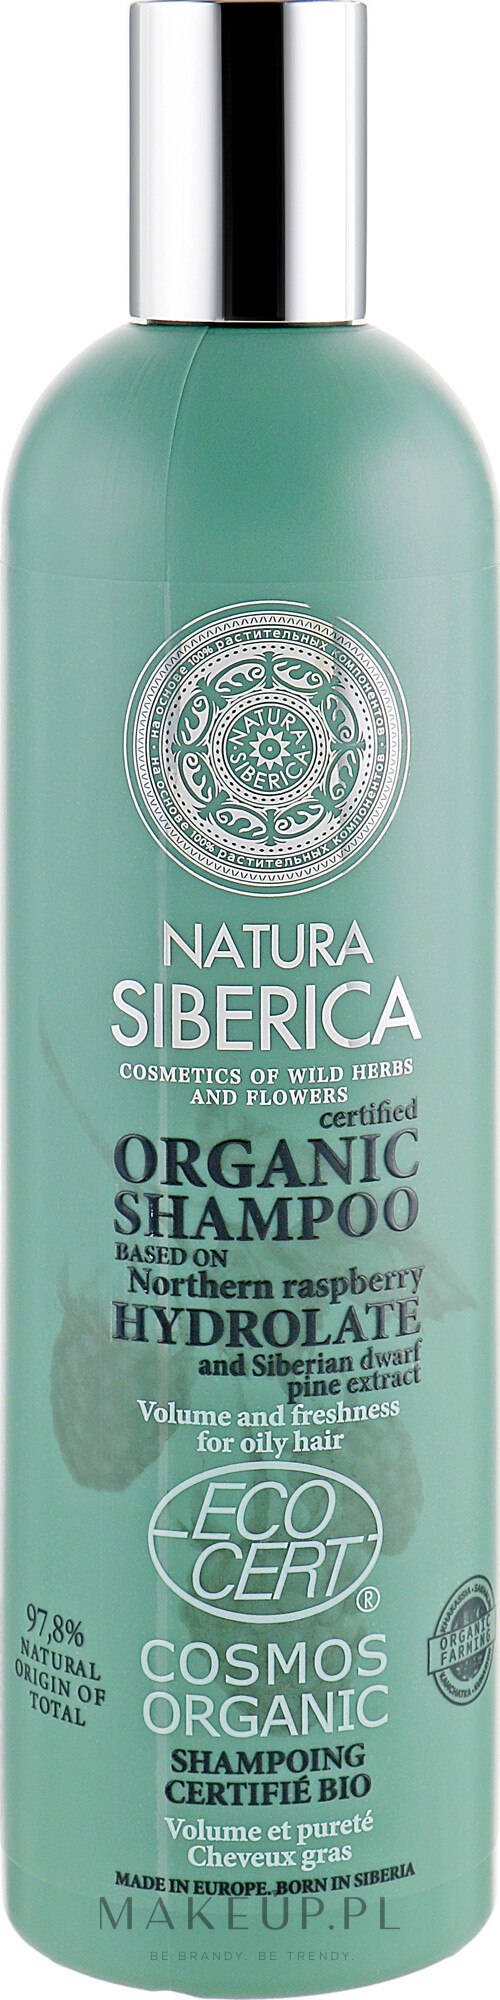 natura siberica opinie szampon